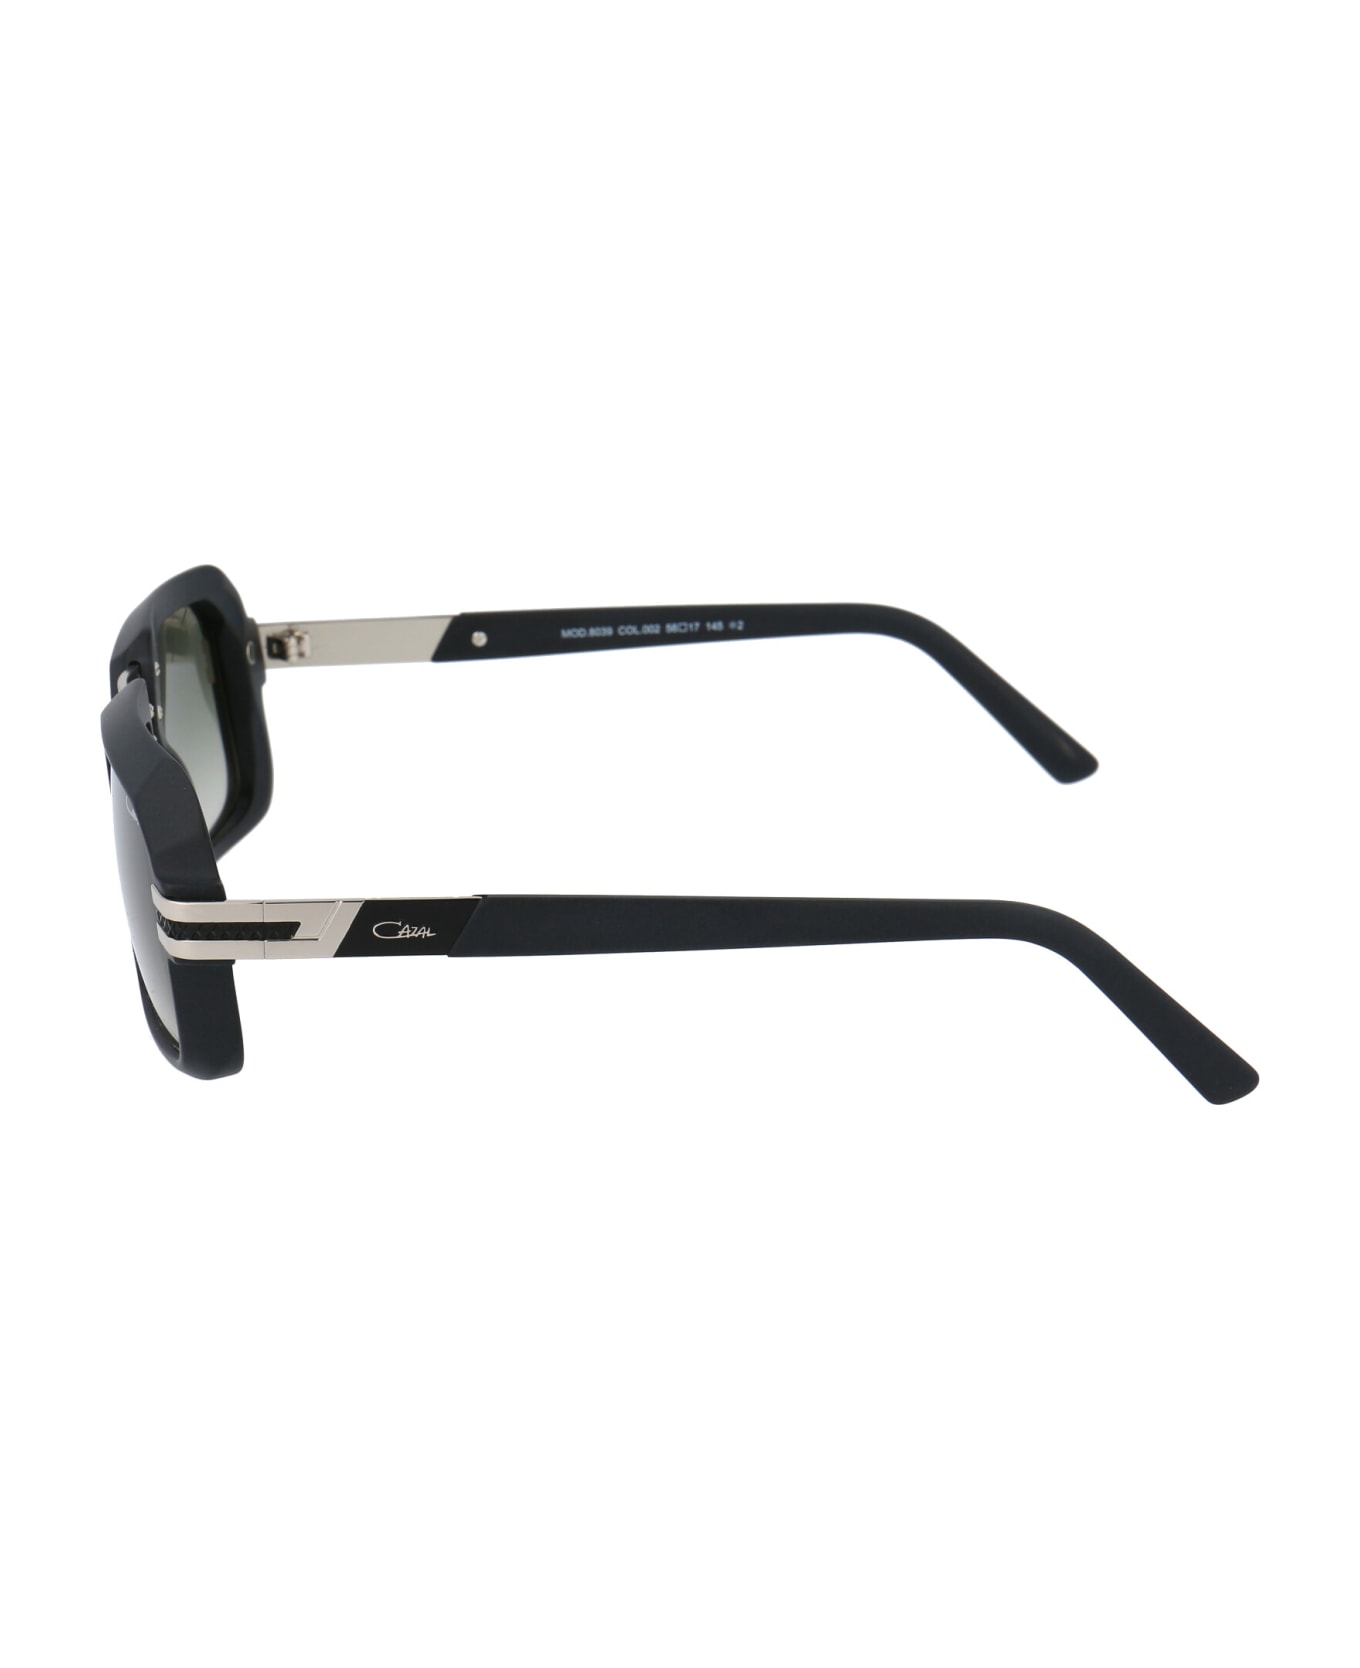 Cazal Mod. 8039 Sunglasses - BLACK MATTE サングラス